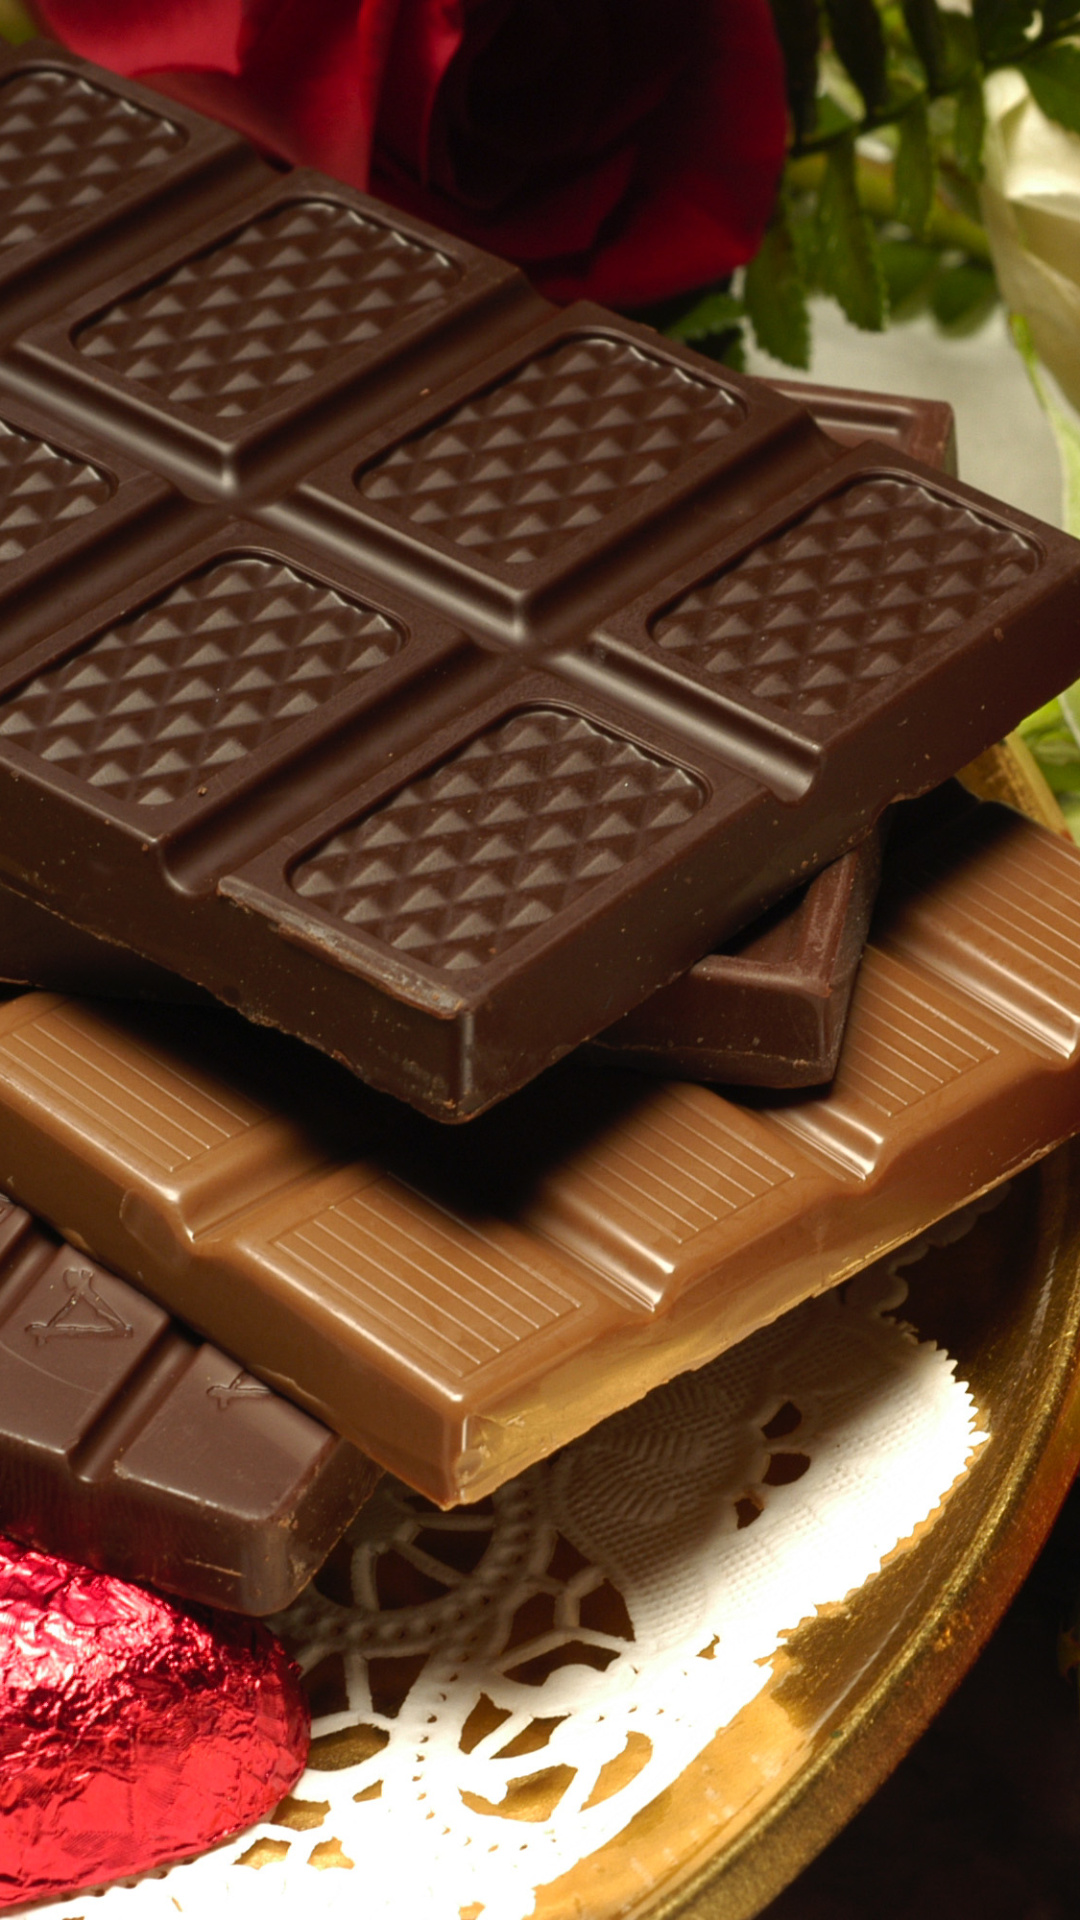 Chocolate: A confection in bar form comprising cocoa solids, cocoa butter, sugar, milk. 1080x1920 Full HD Wallpaper.